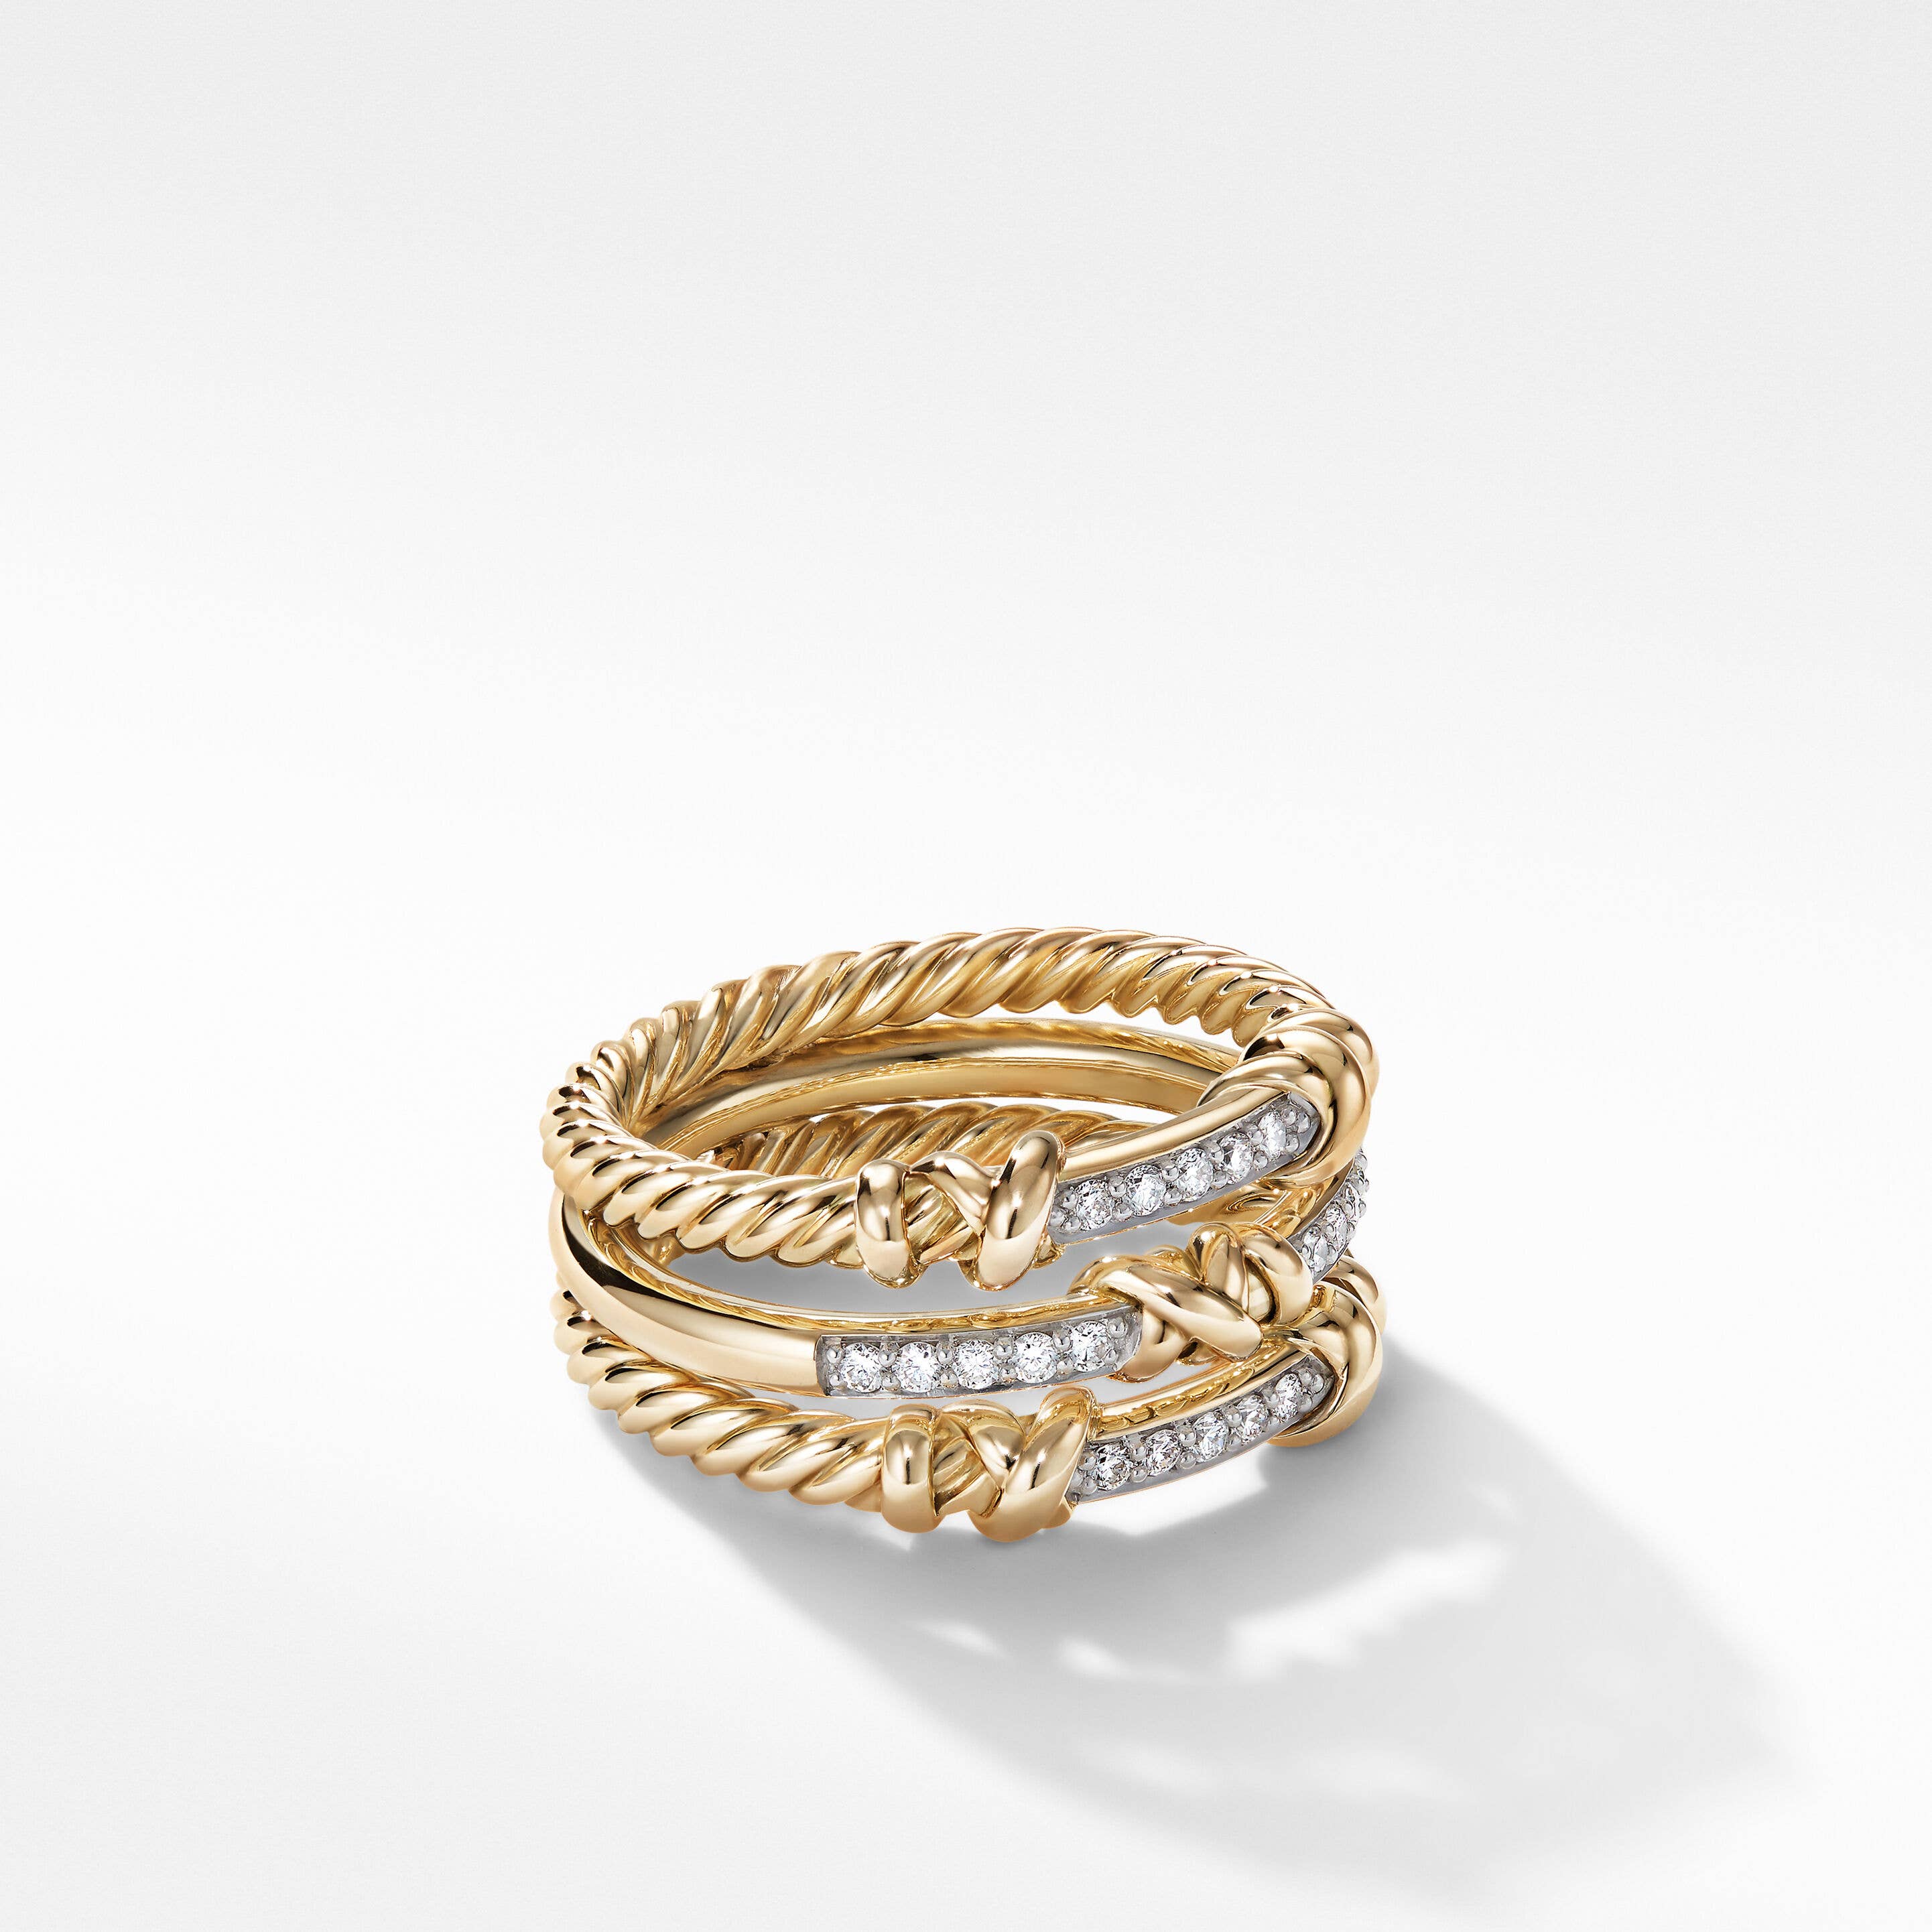 Petite Helena Wrap Three Row Ring in 18K Yellow Gold with Pavé Diamonds